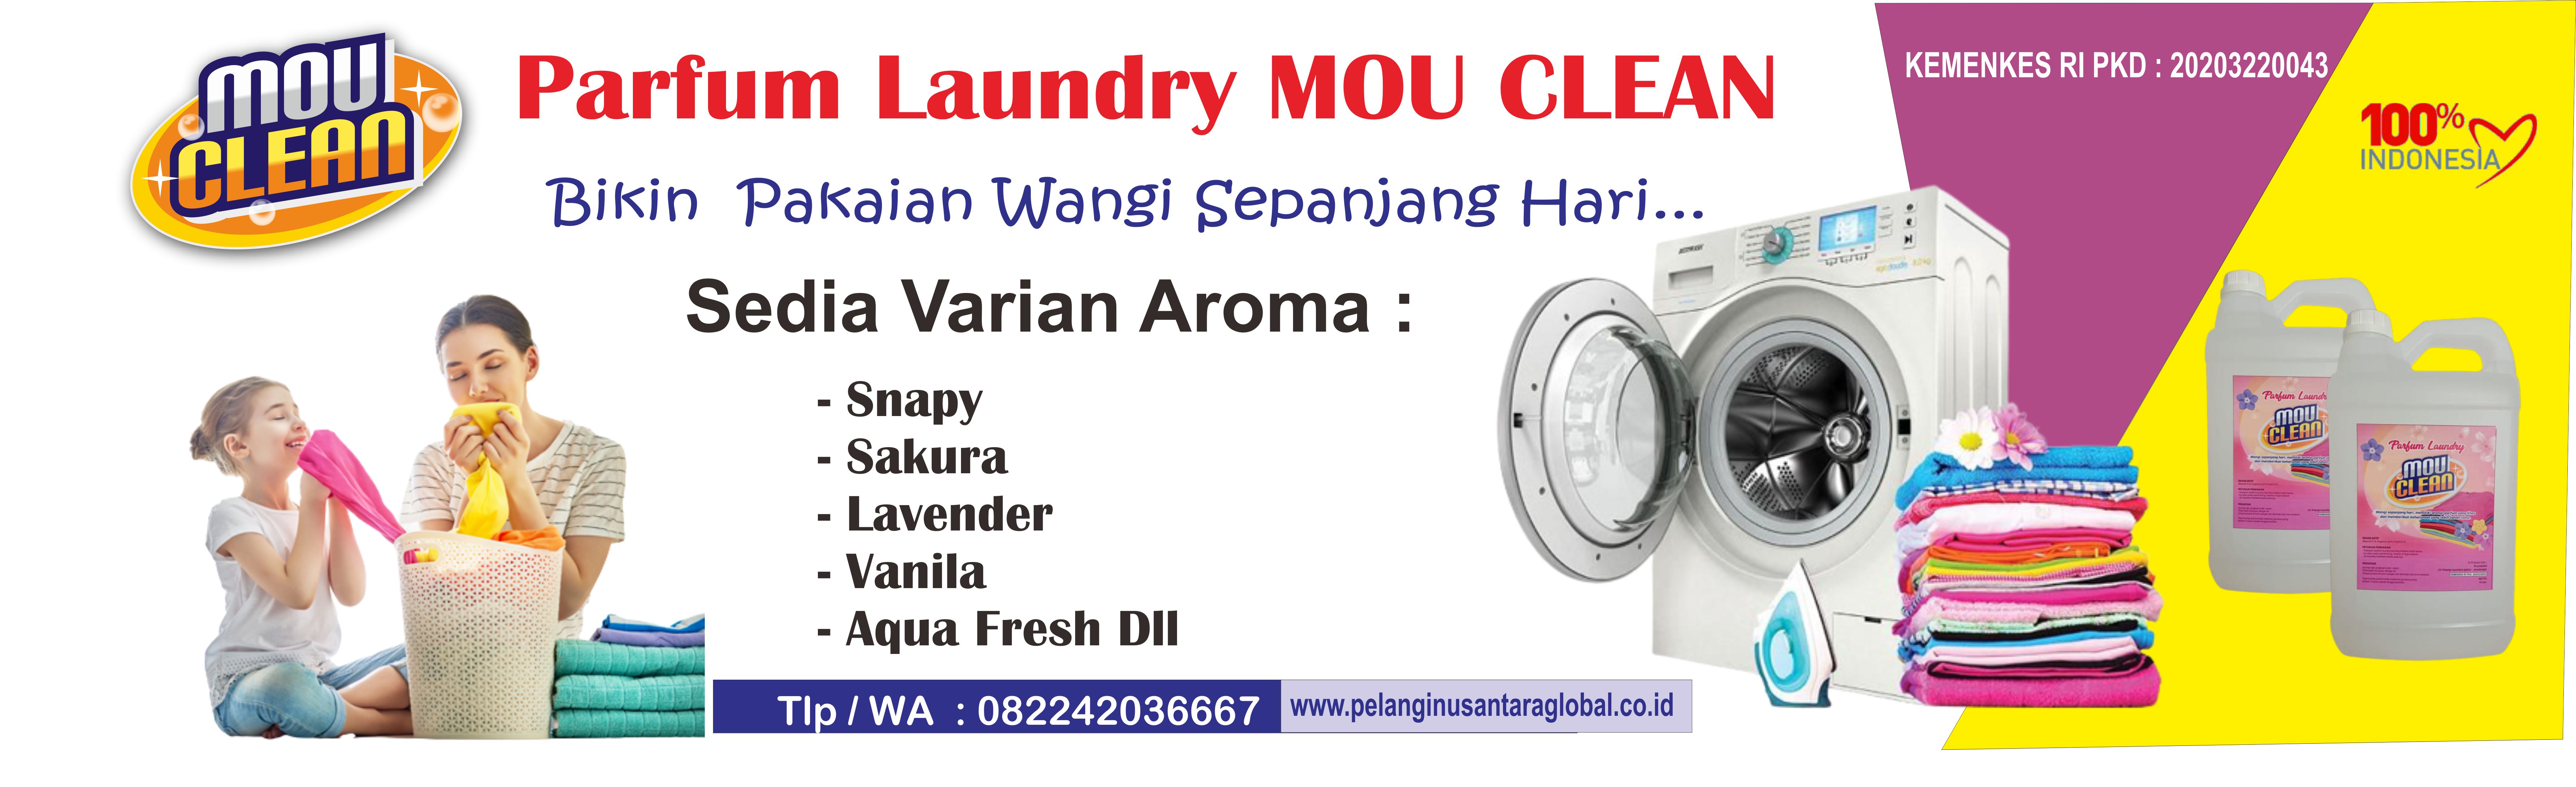 Harga  Parfum Laundry Mou Clean  Di Bandung